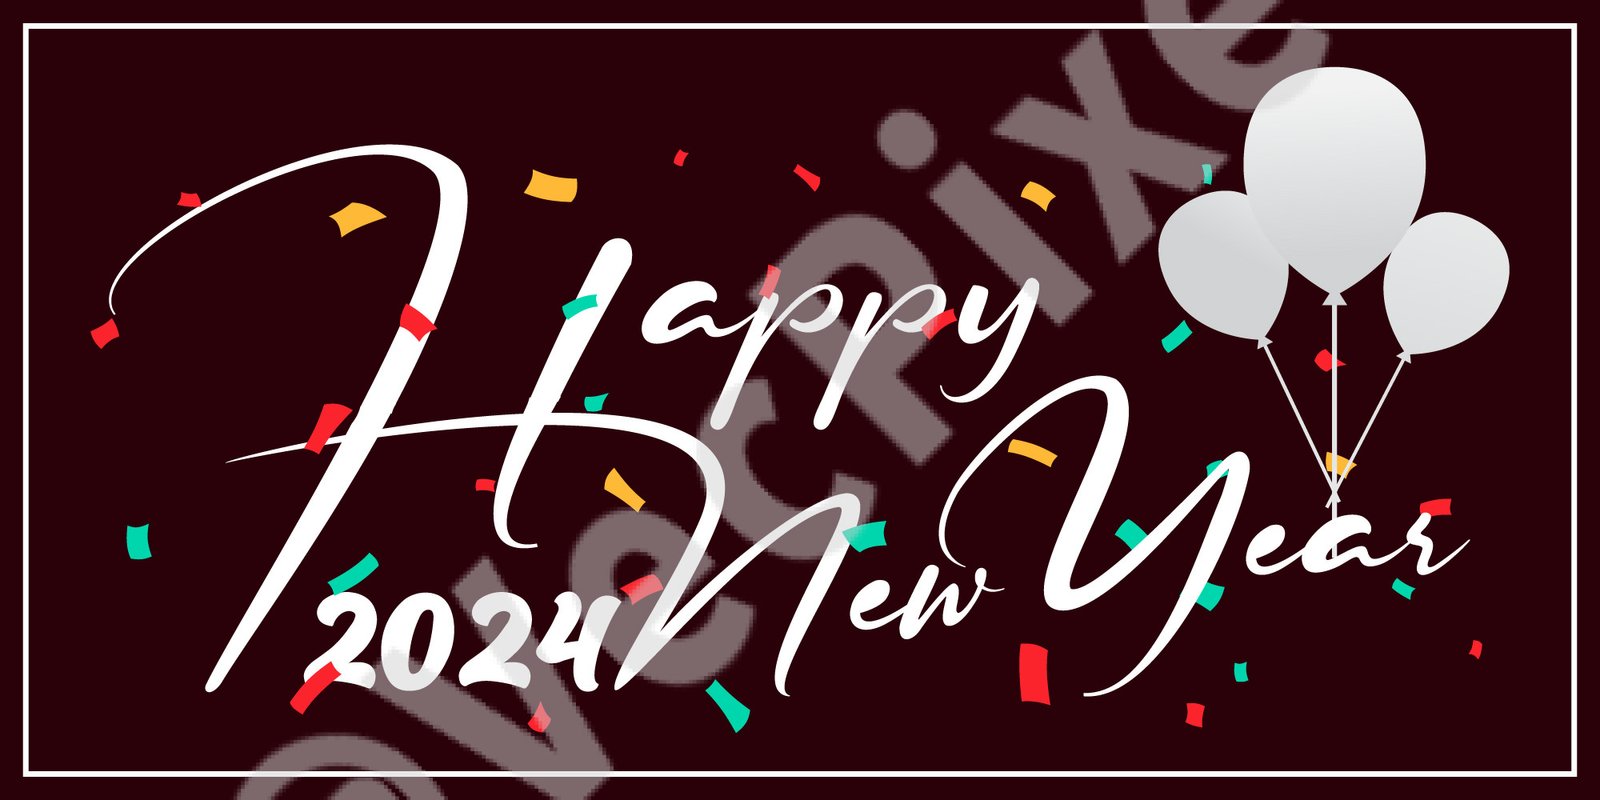 VecPixel - Free Vectors Image Download - Happy New Year 2024 Text